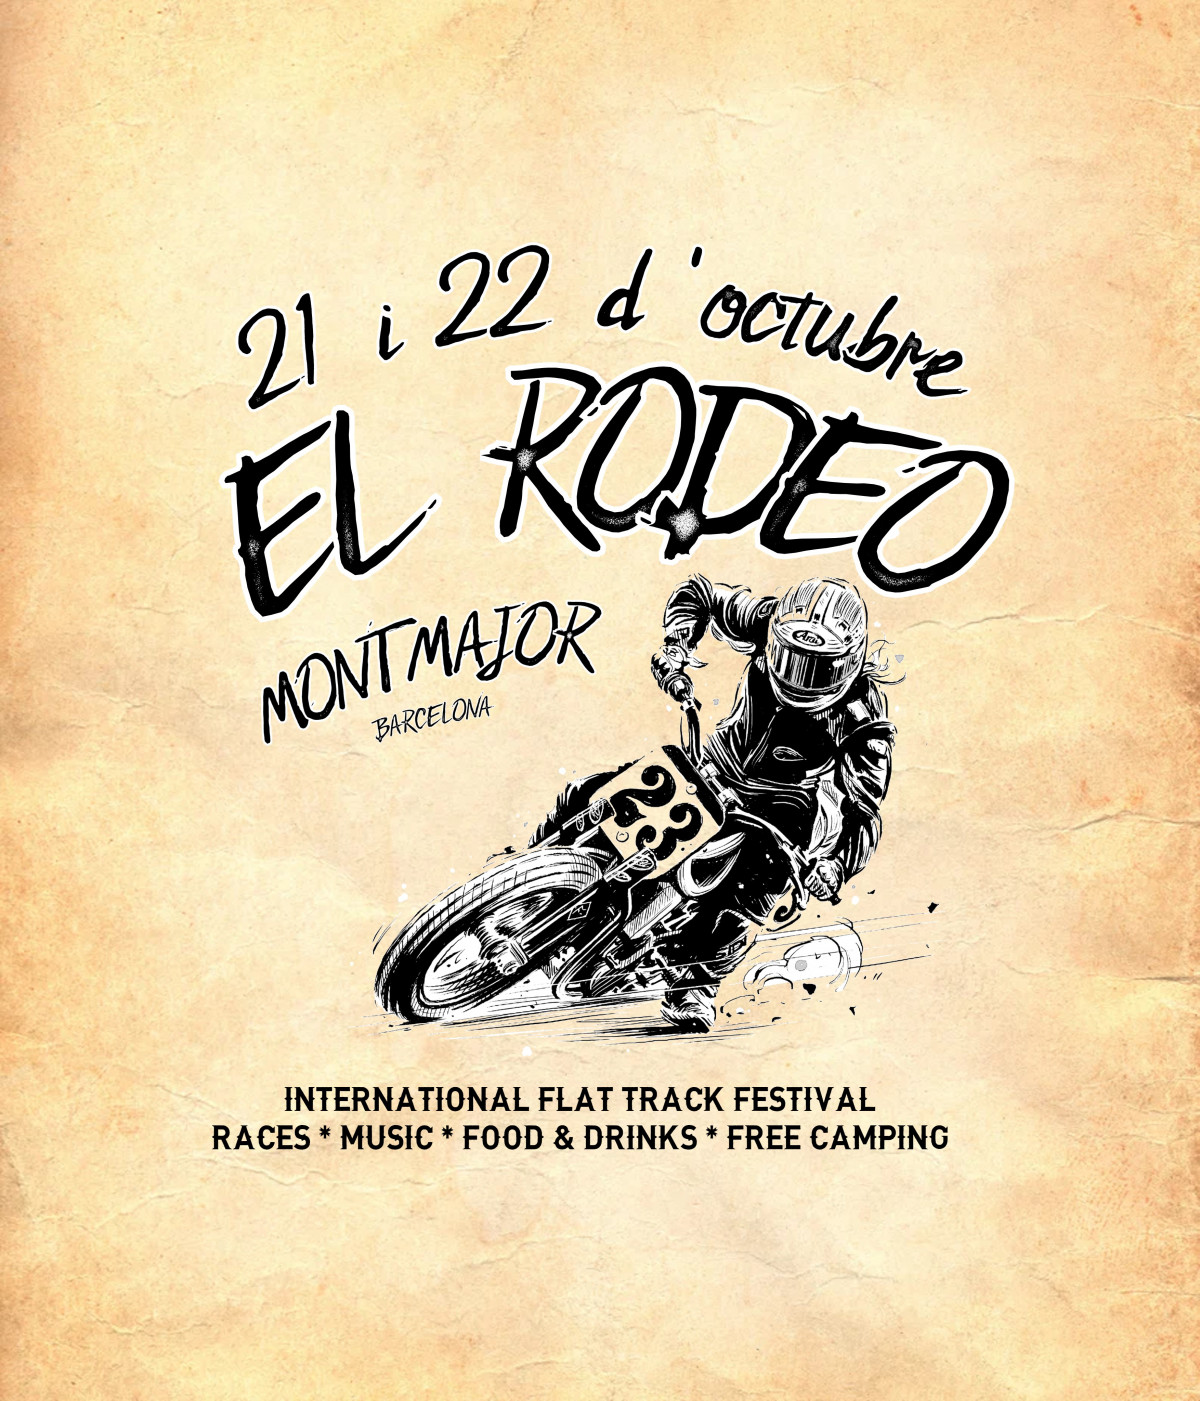 El Rodeo - International Flat Track Festival